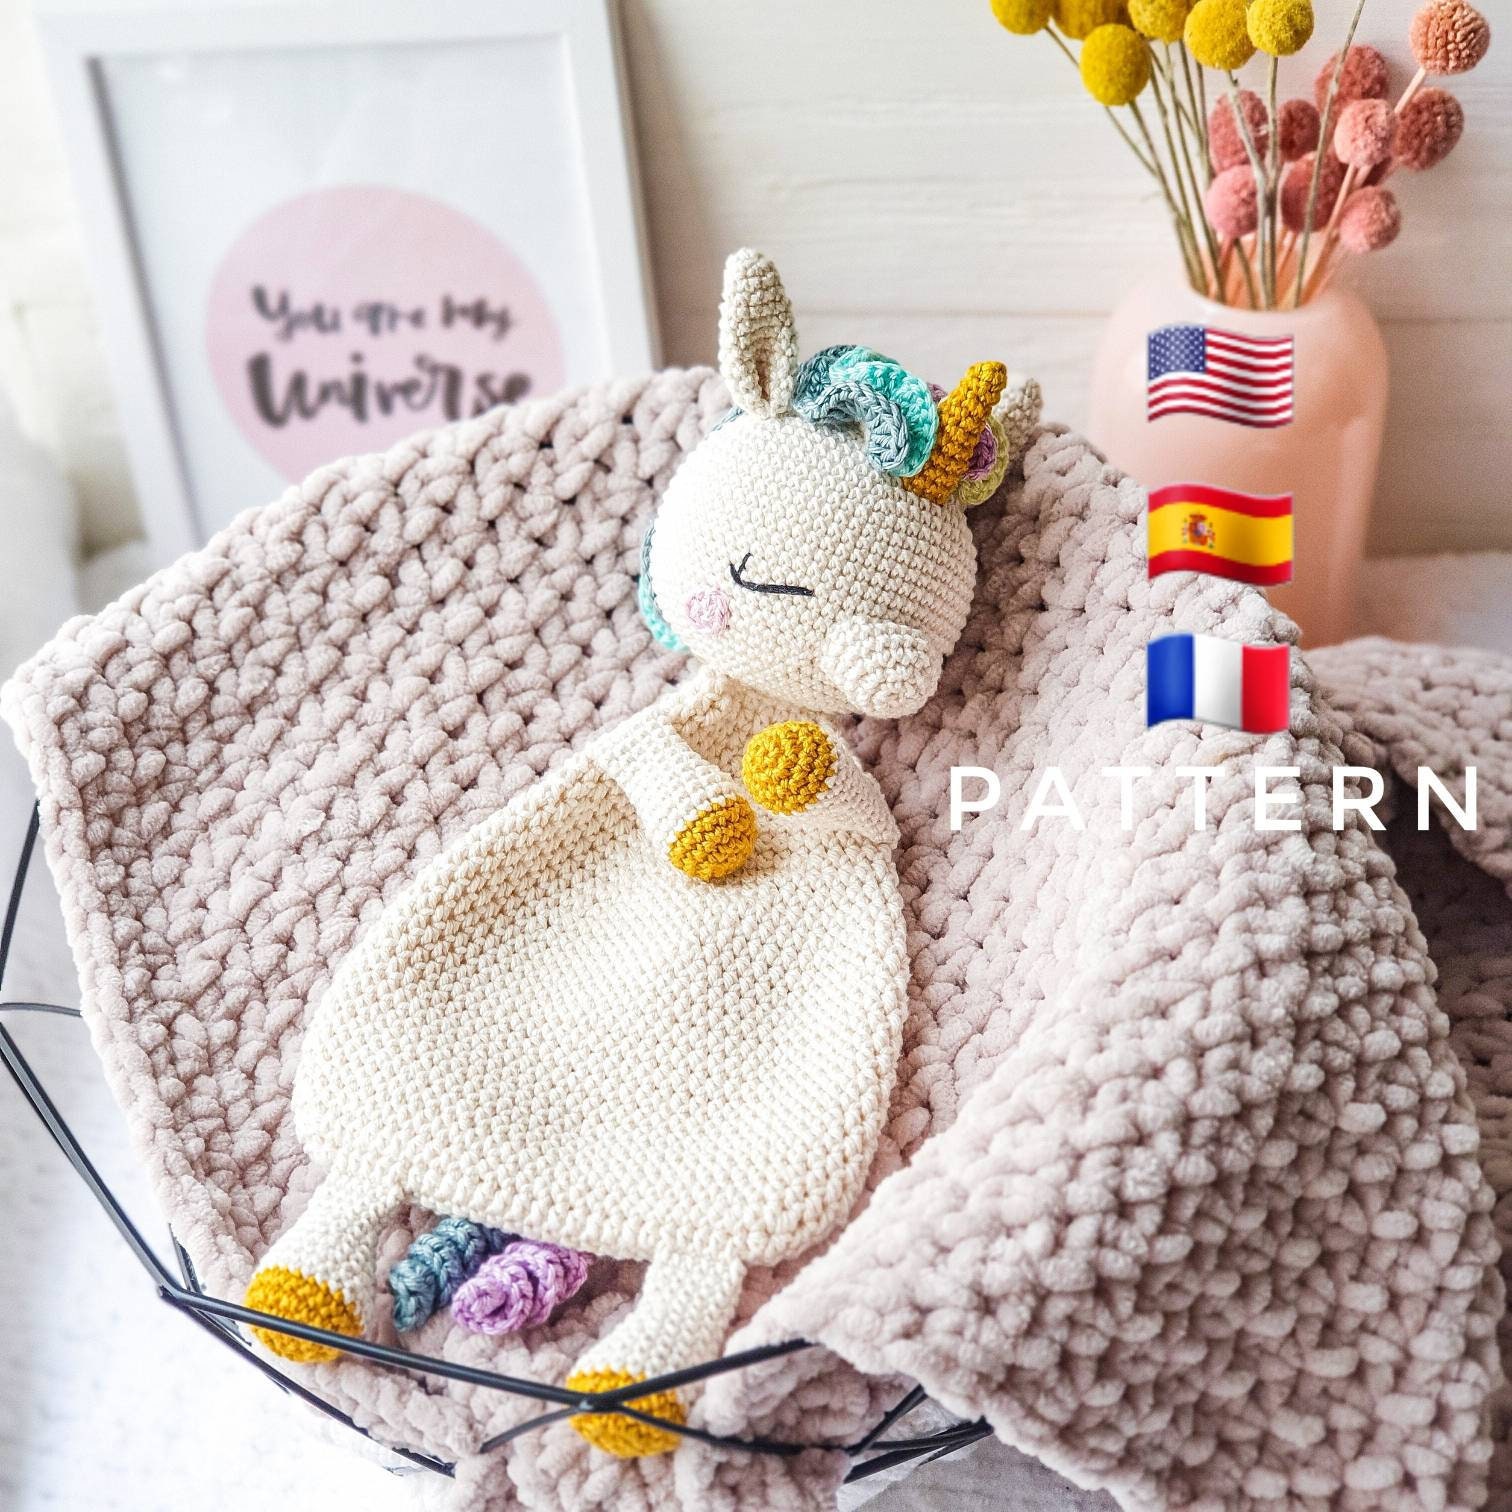 Baby Security BlanketPlush Stuffed Animal ComforterSoft Unicorn/Giraffe 